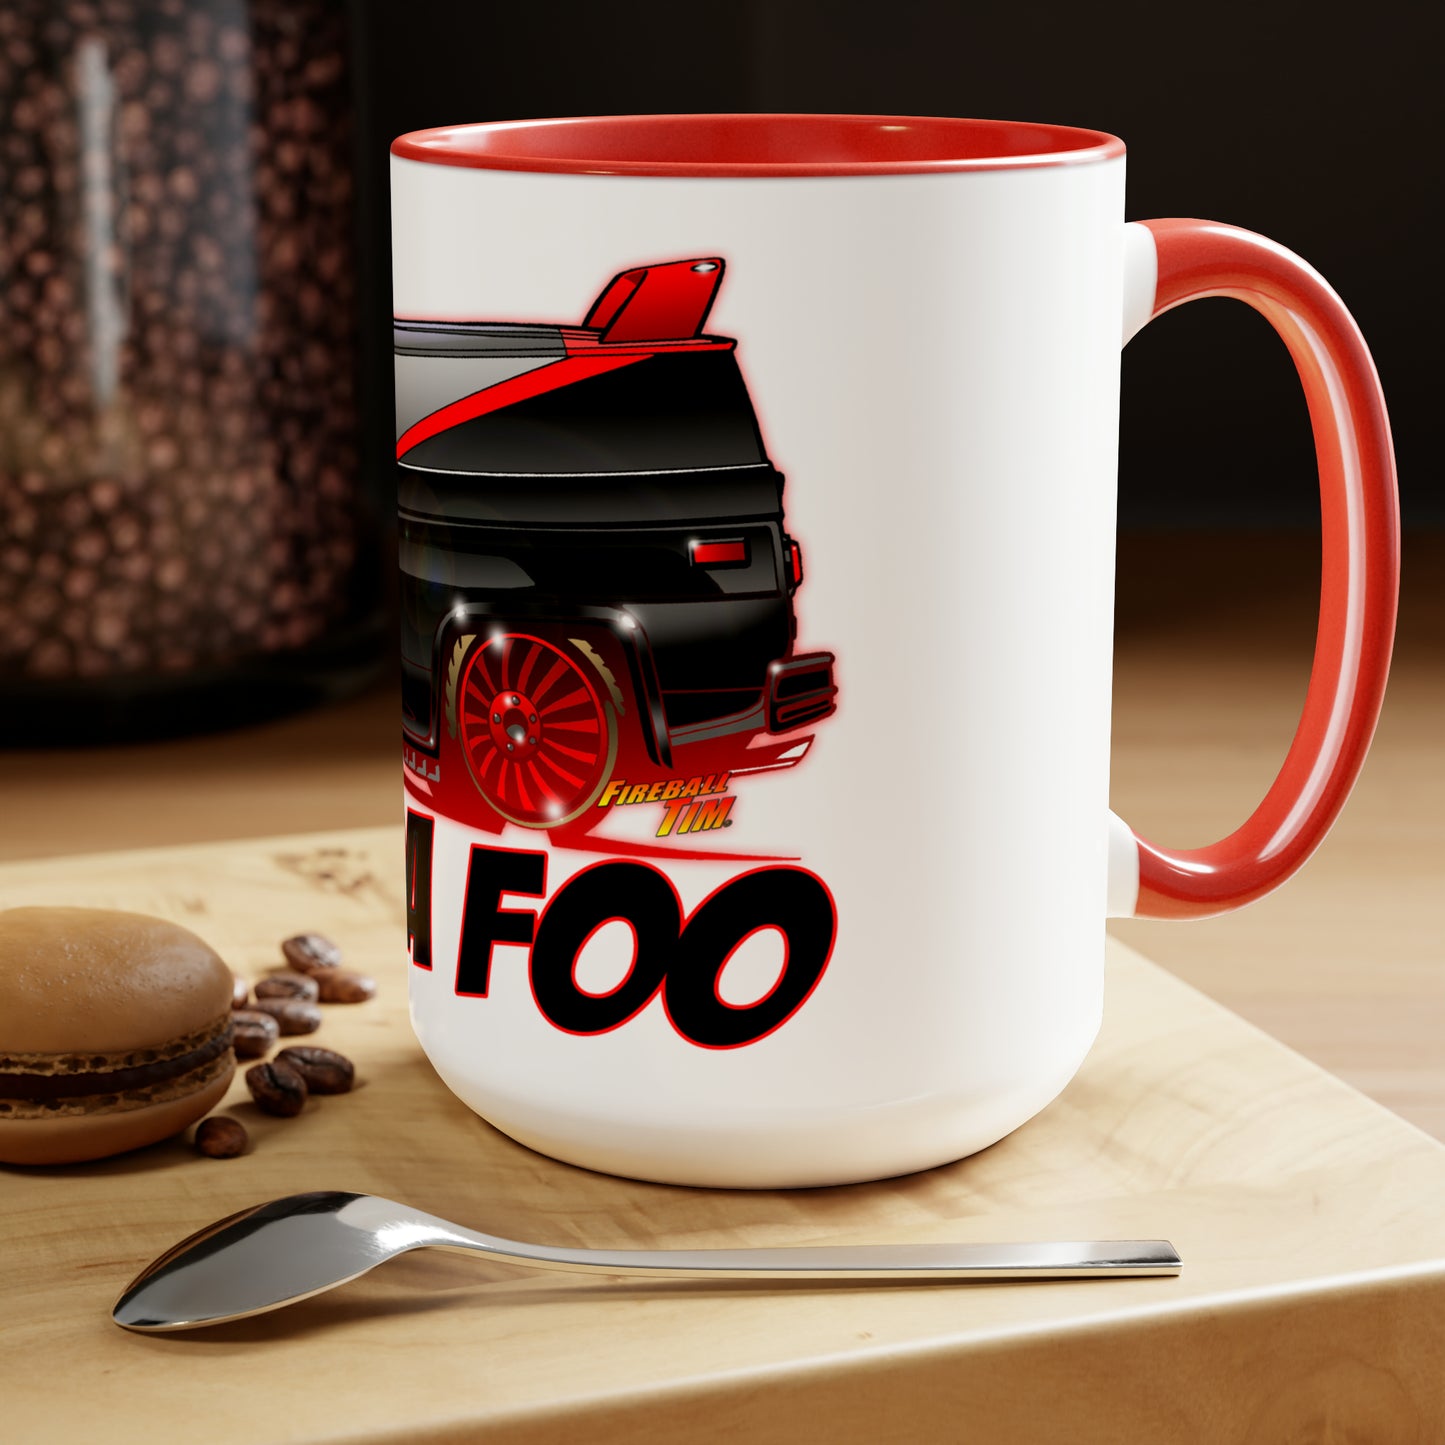 A-TEAM Van Movie Car Coffee Mug 15oz